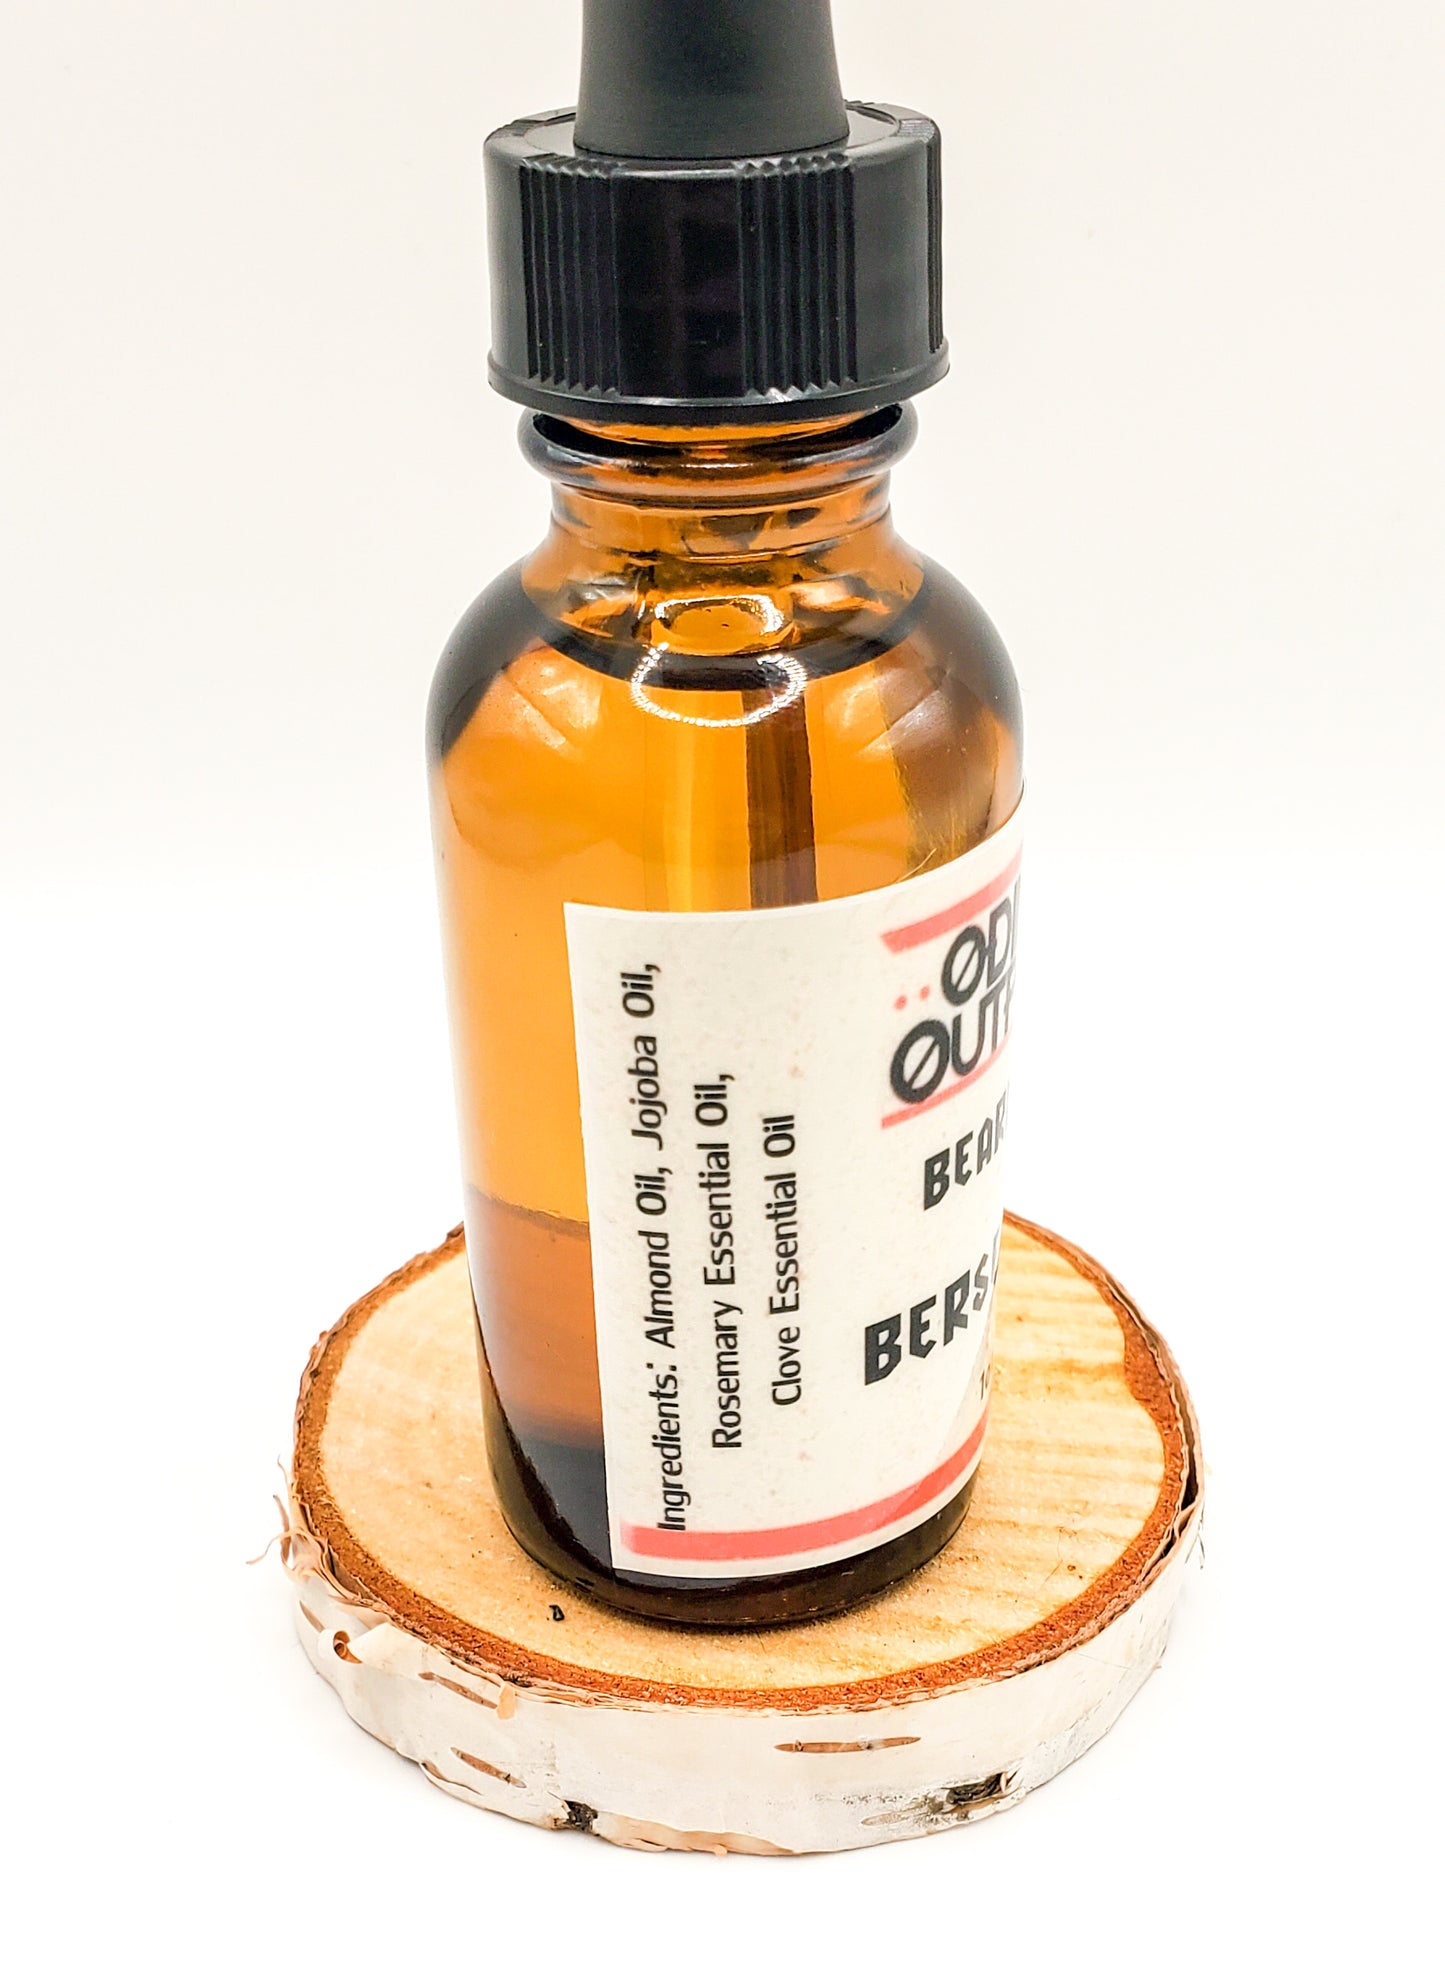 Berserker Beard Oil // Rosemary Clove Beard Oil